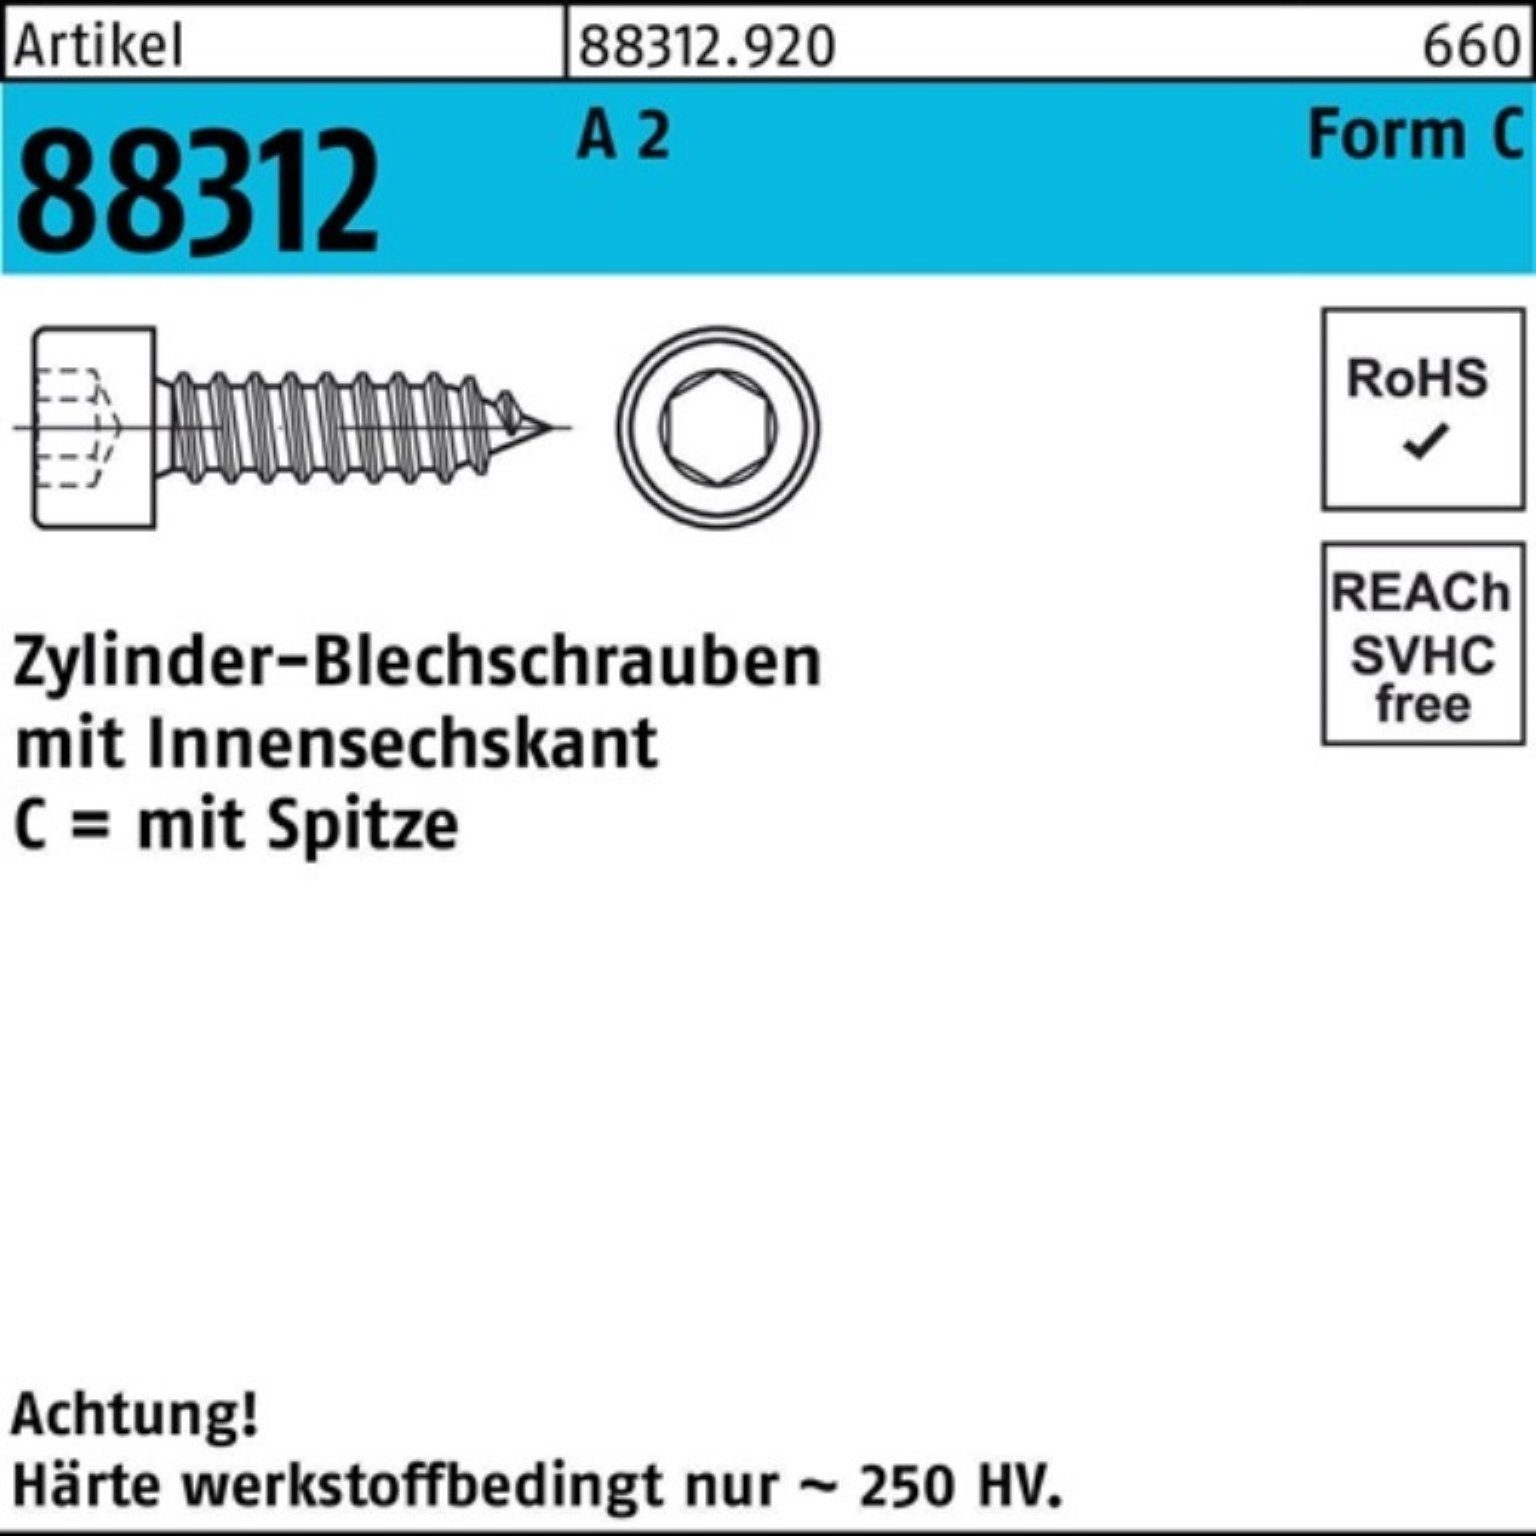 Zylinderblechschraube Spitze/Innen-6kt 5,5x Reyher Pack C 88312 50 A 200er R Blechschraube